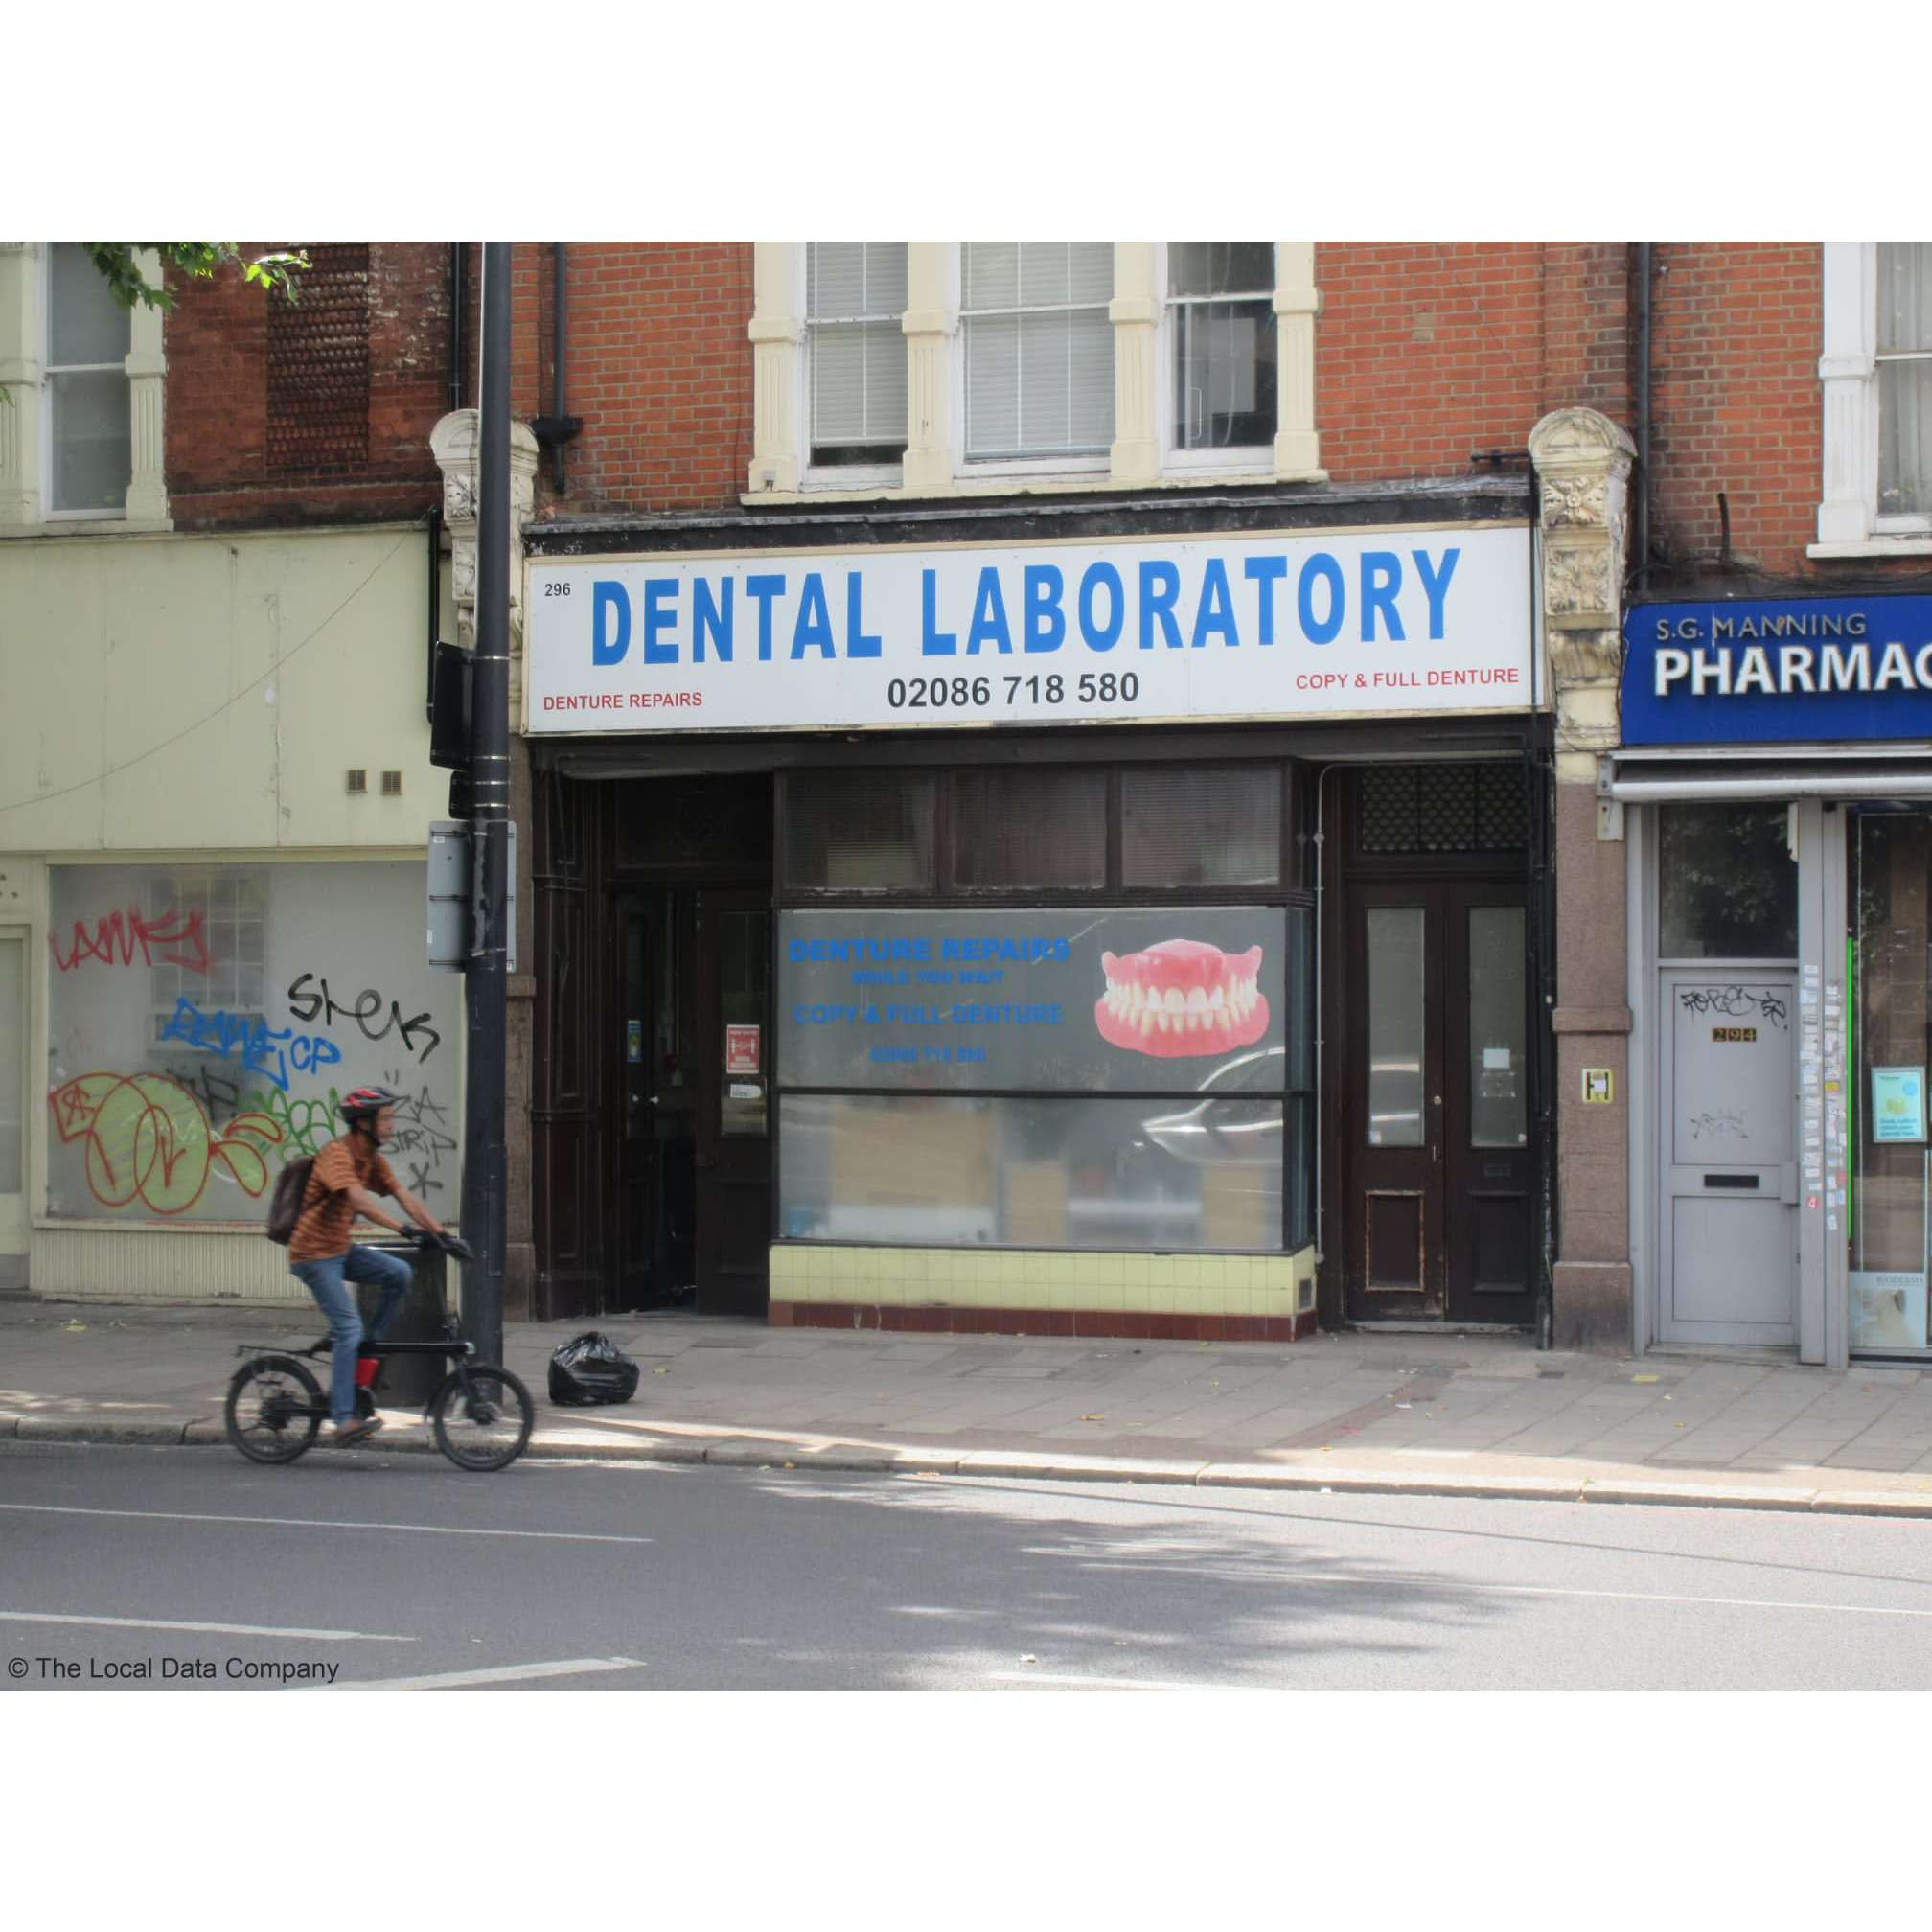 G Szekely Dental Laboratory - London, London SW2 1HT - 020 8671 8580 | ShowMeLocal.com